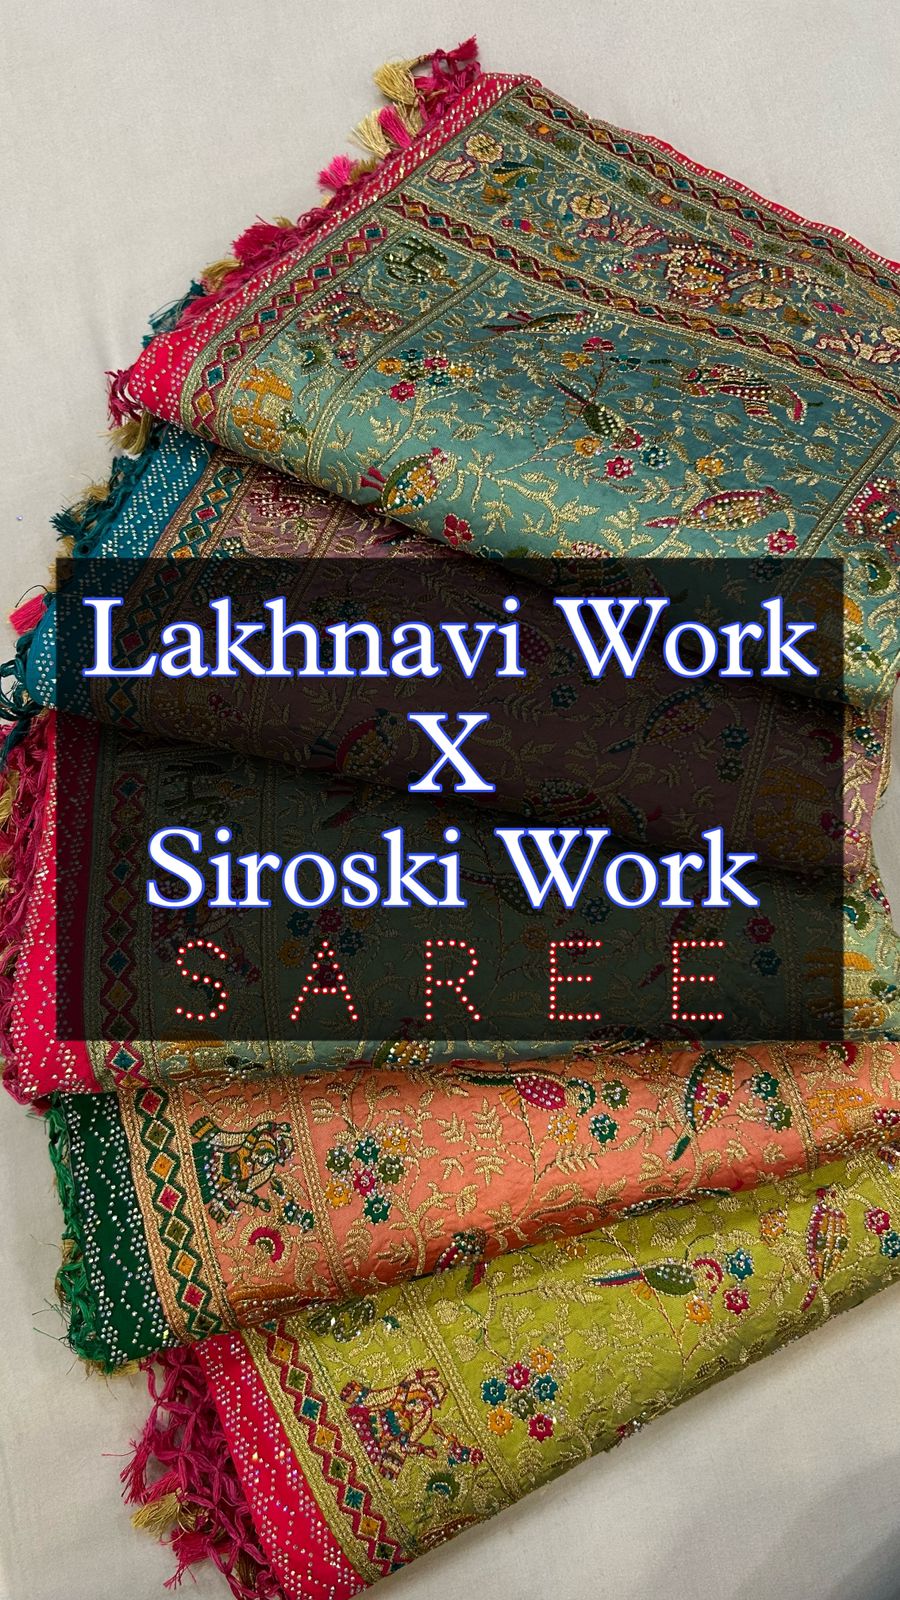 Lakhanavi X Siroski Work